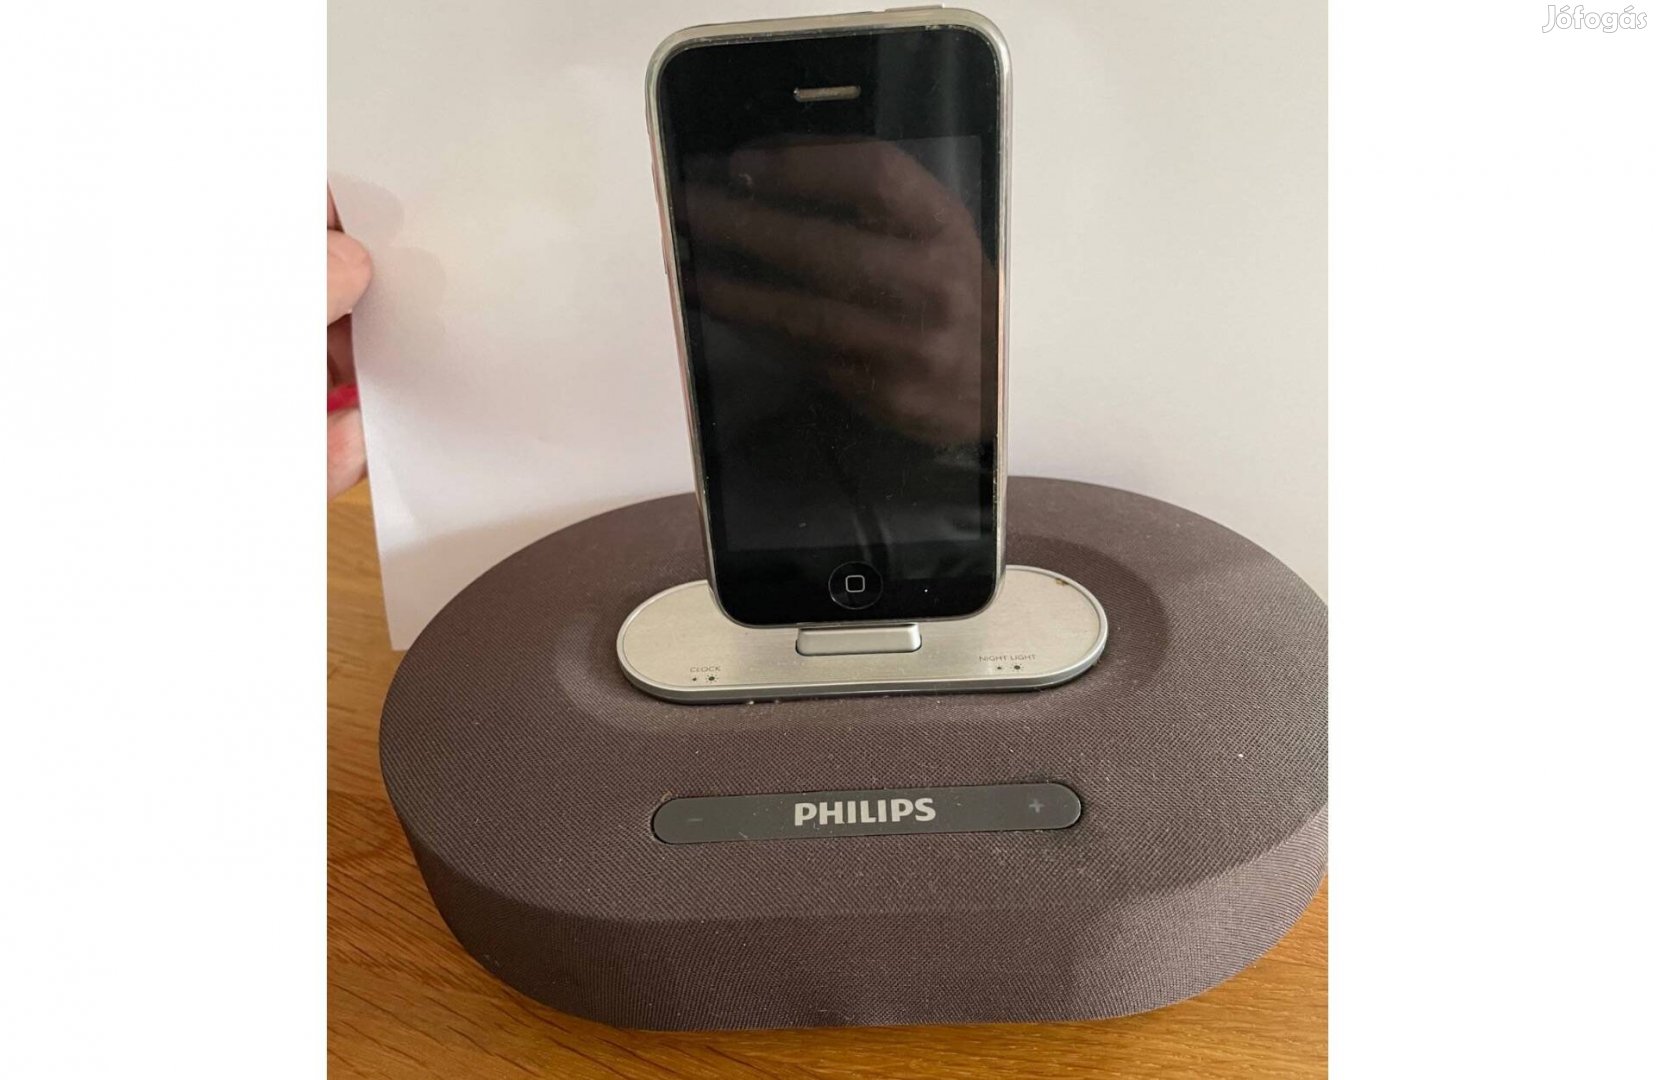 Philips hangszoro (Ambient light) iphone-hoz